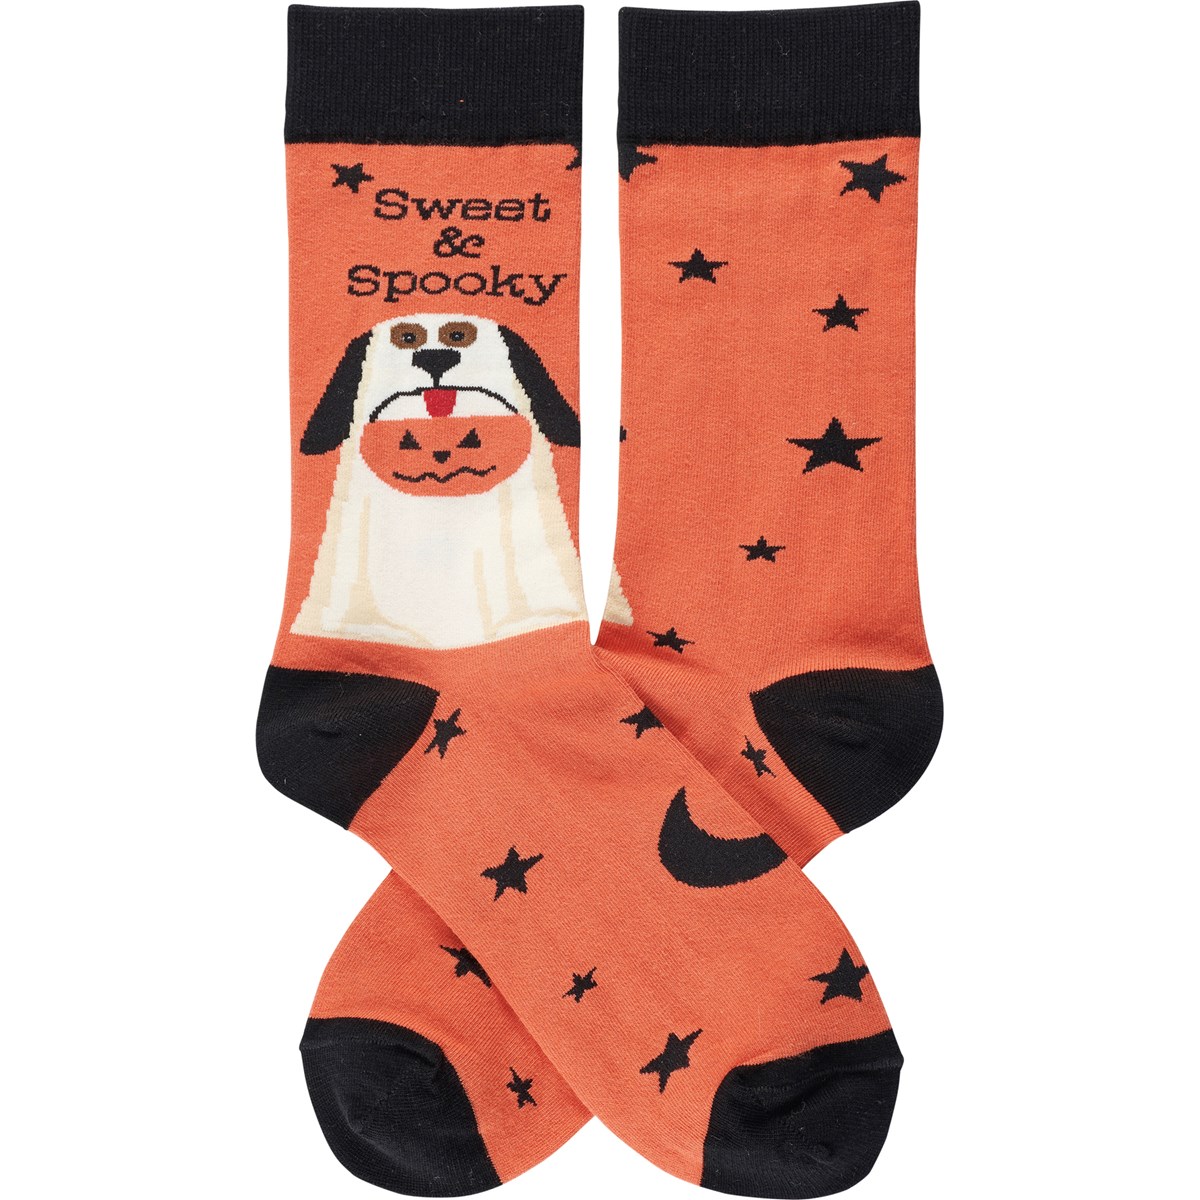 Sweet & Spooky Socks - Cotton, Nylon, Spandex